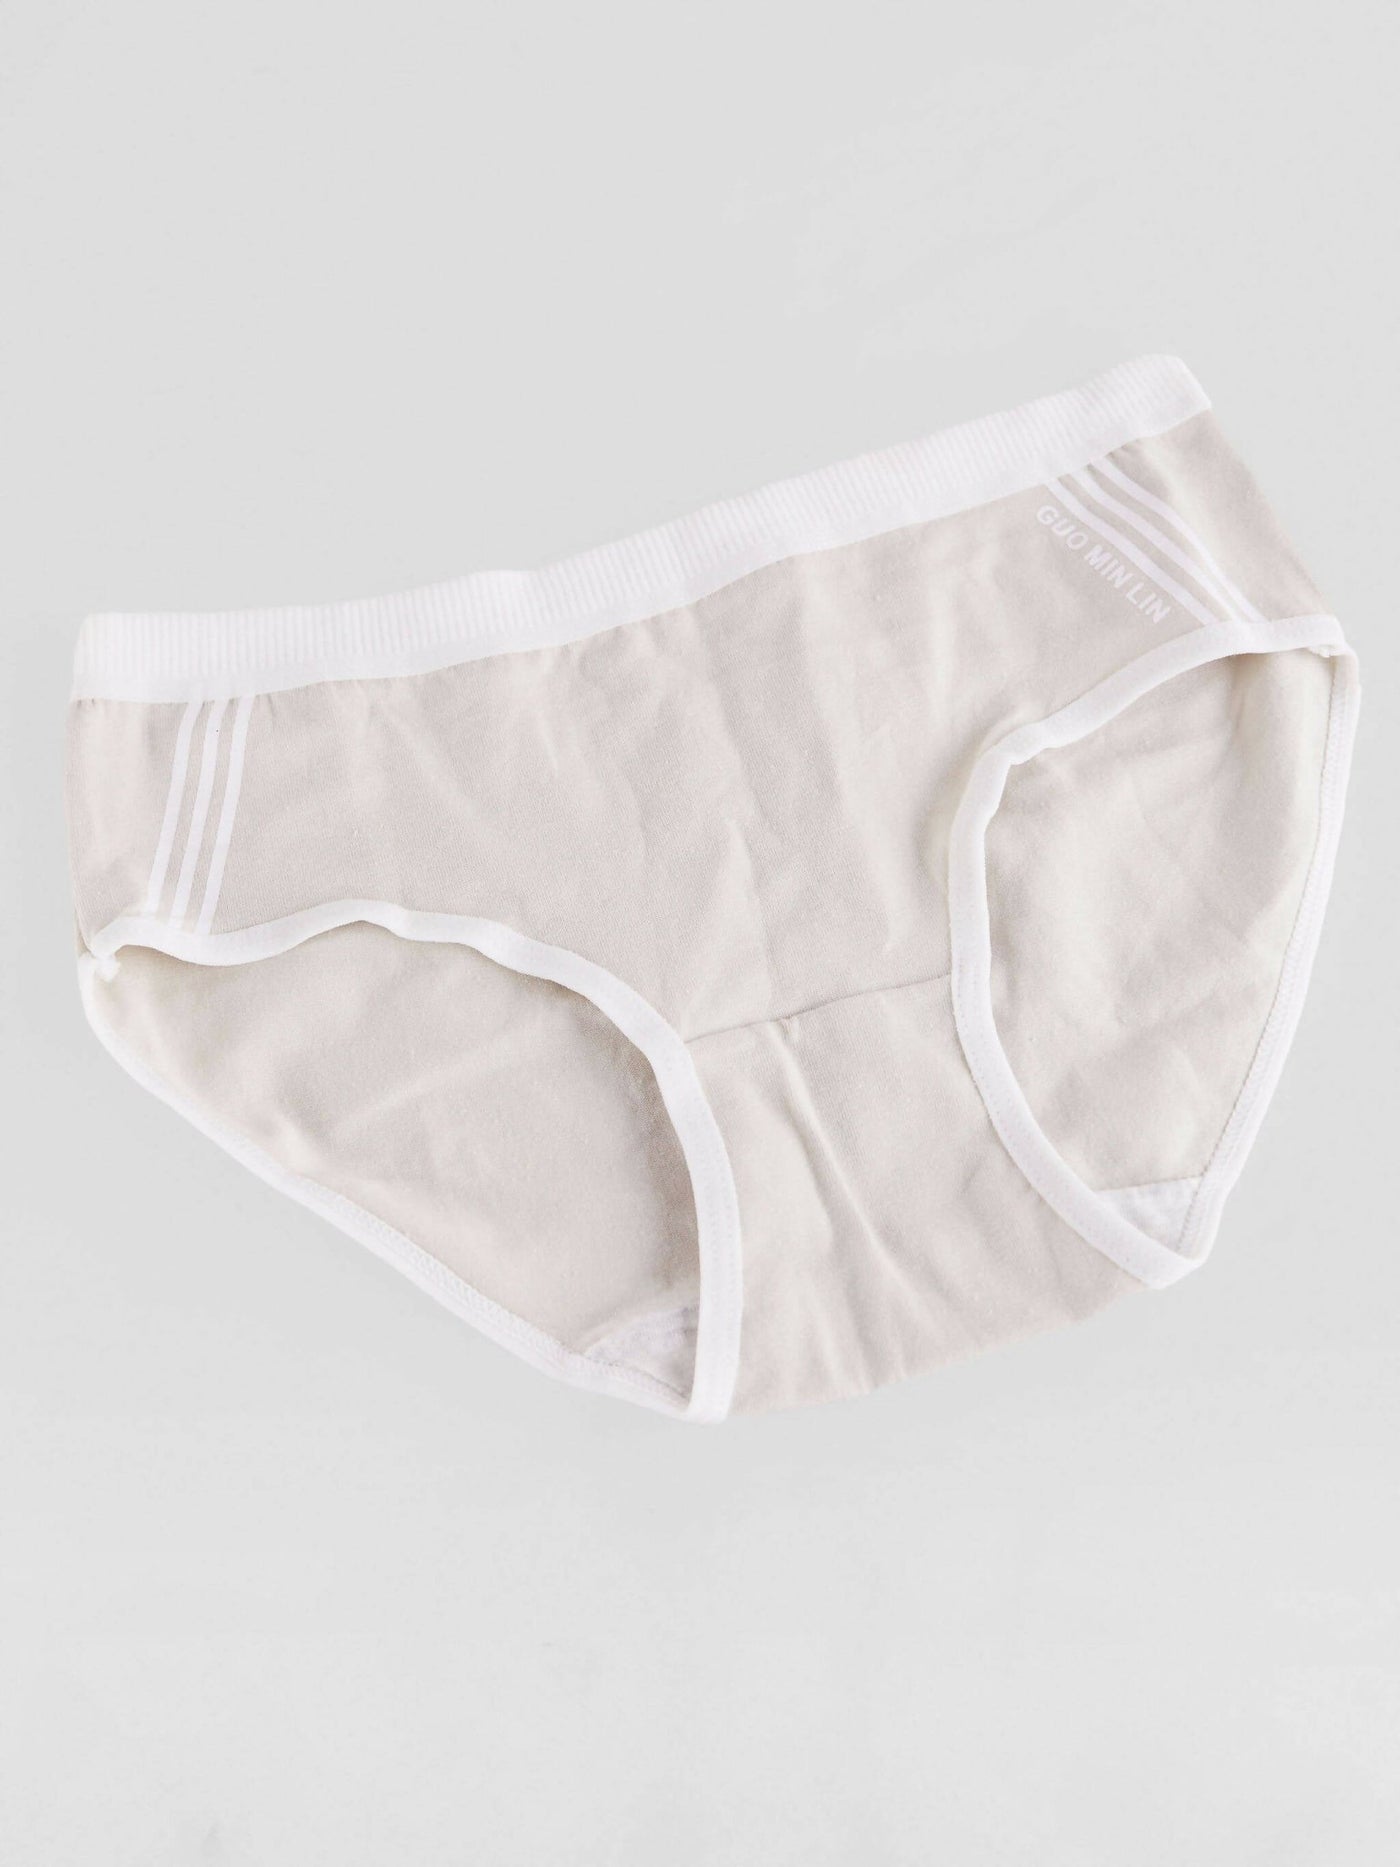 Coco's Intimates Cotton Panty - Grey / White - Shopzetu